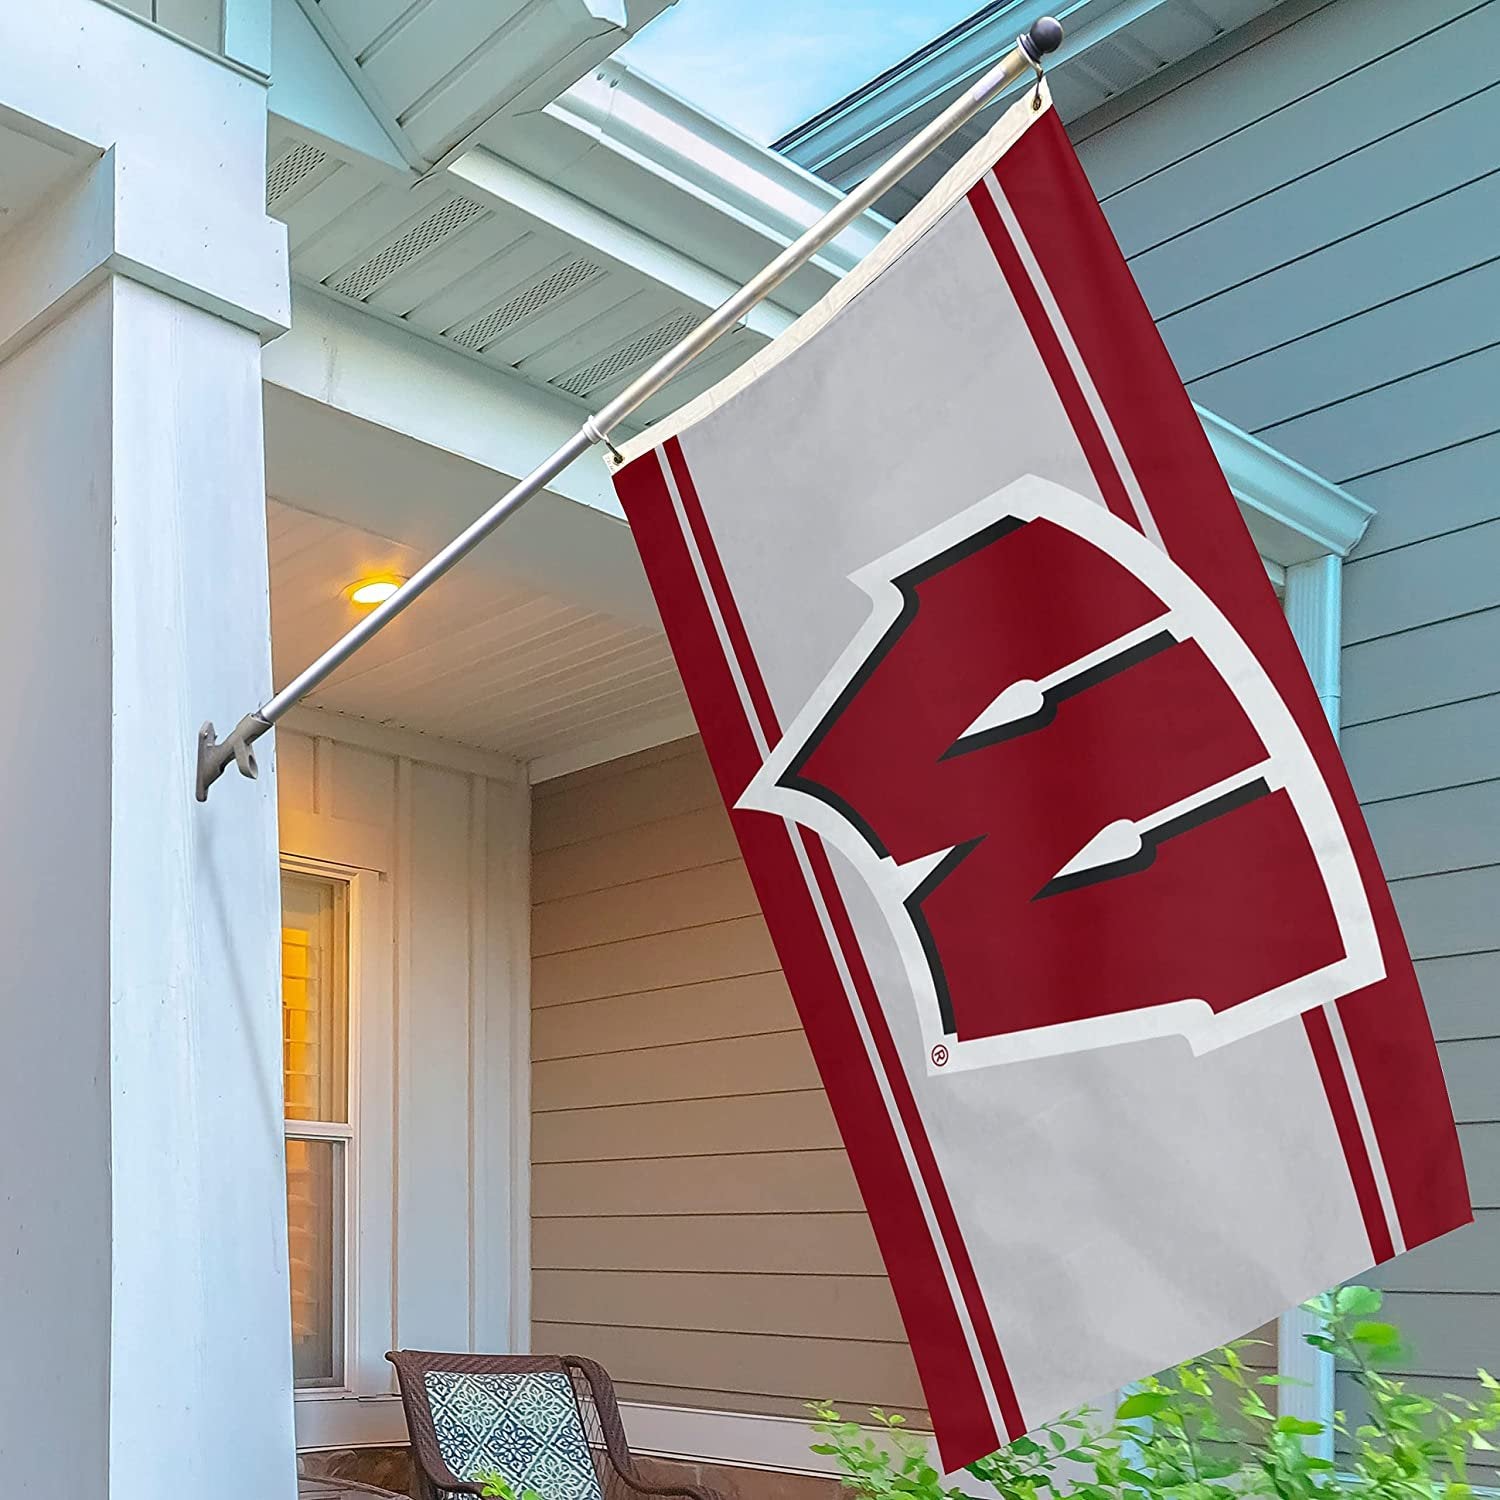 University of Wisconsin Badgers Flag Banner 3x5 Feet Metal Grommets Logo Design